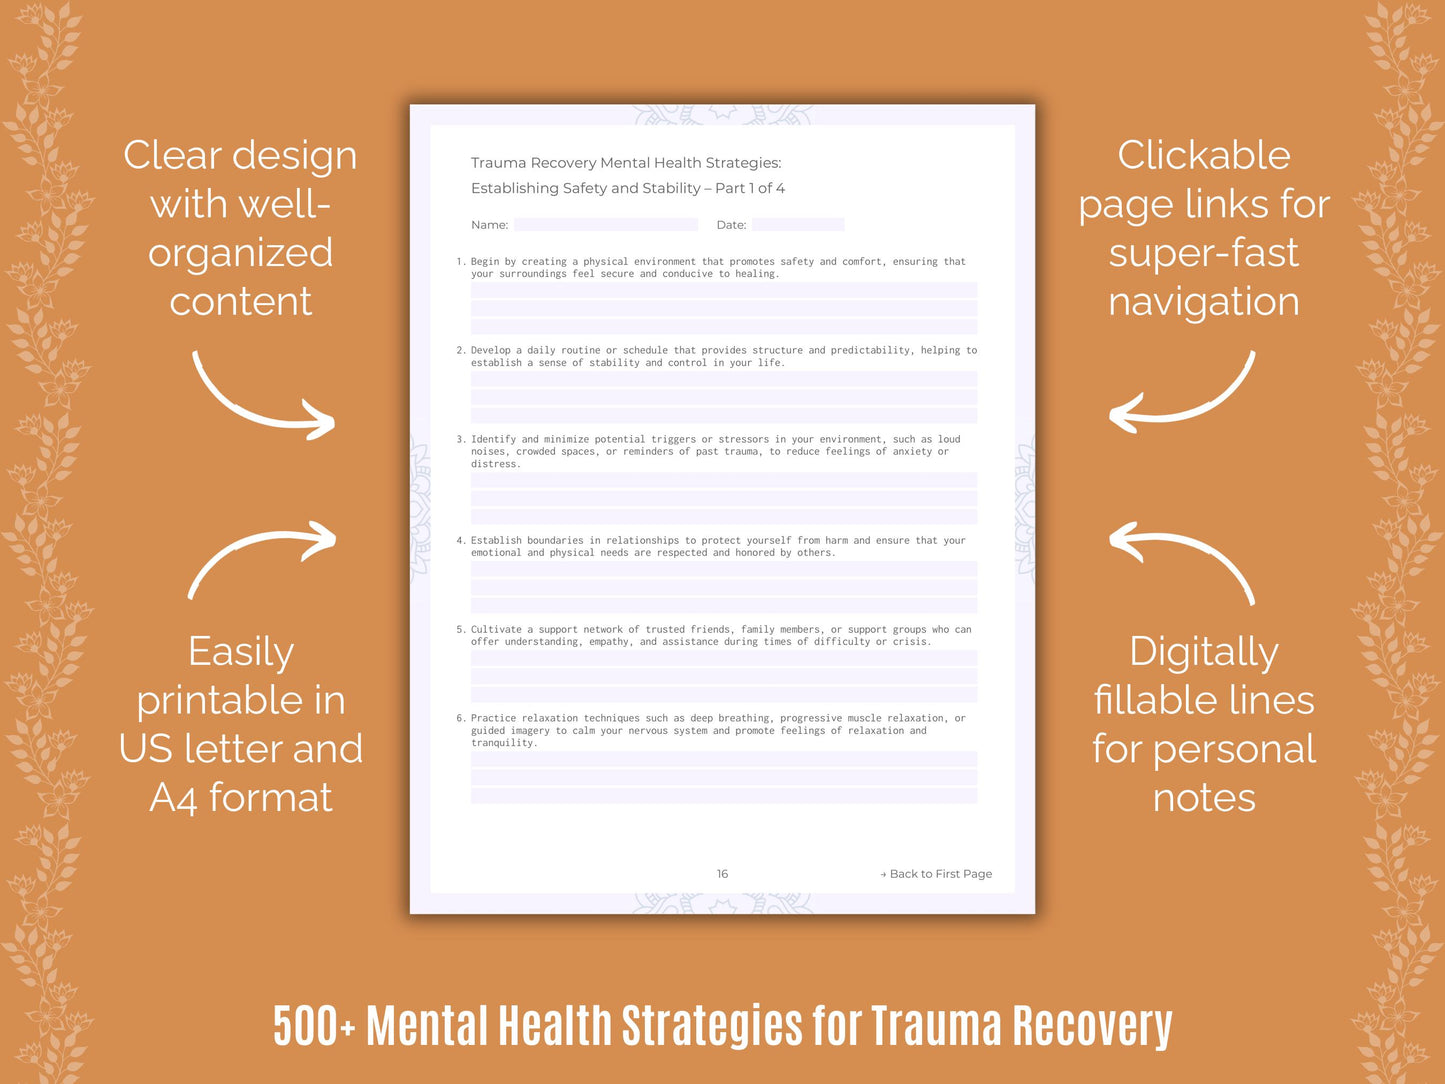 Trauma Recovery Mental Health Strategies Resource